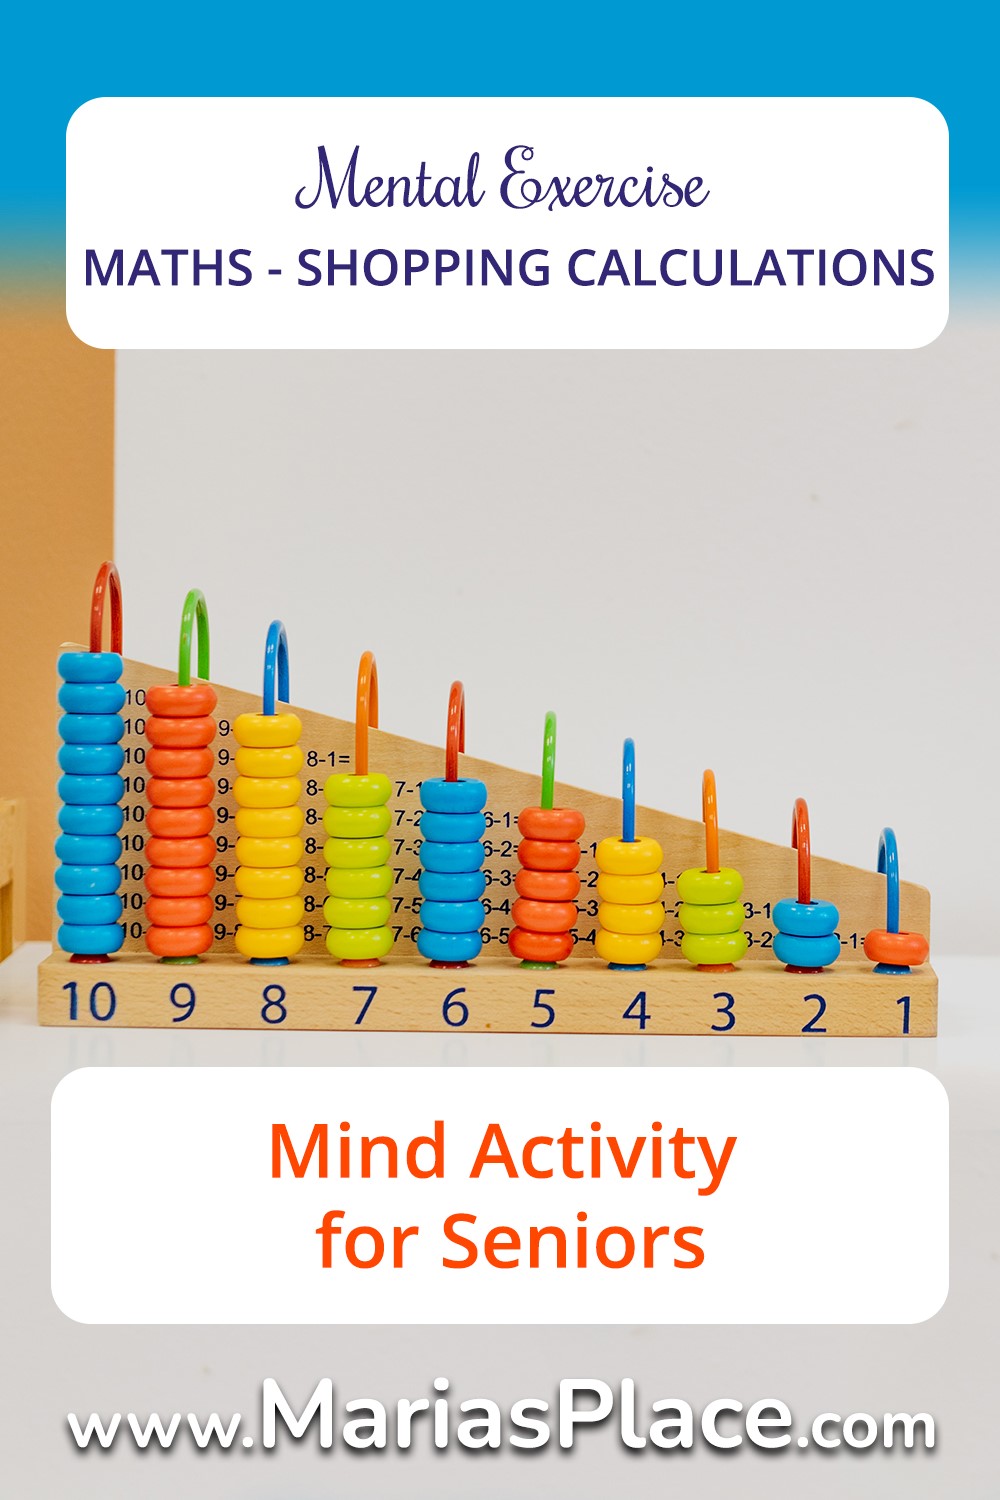 Maths – Shopping Calculations